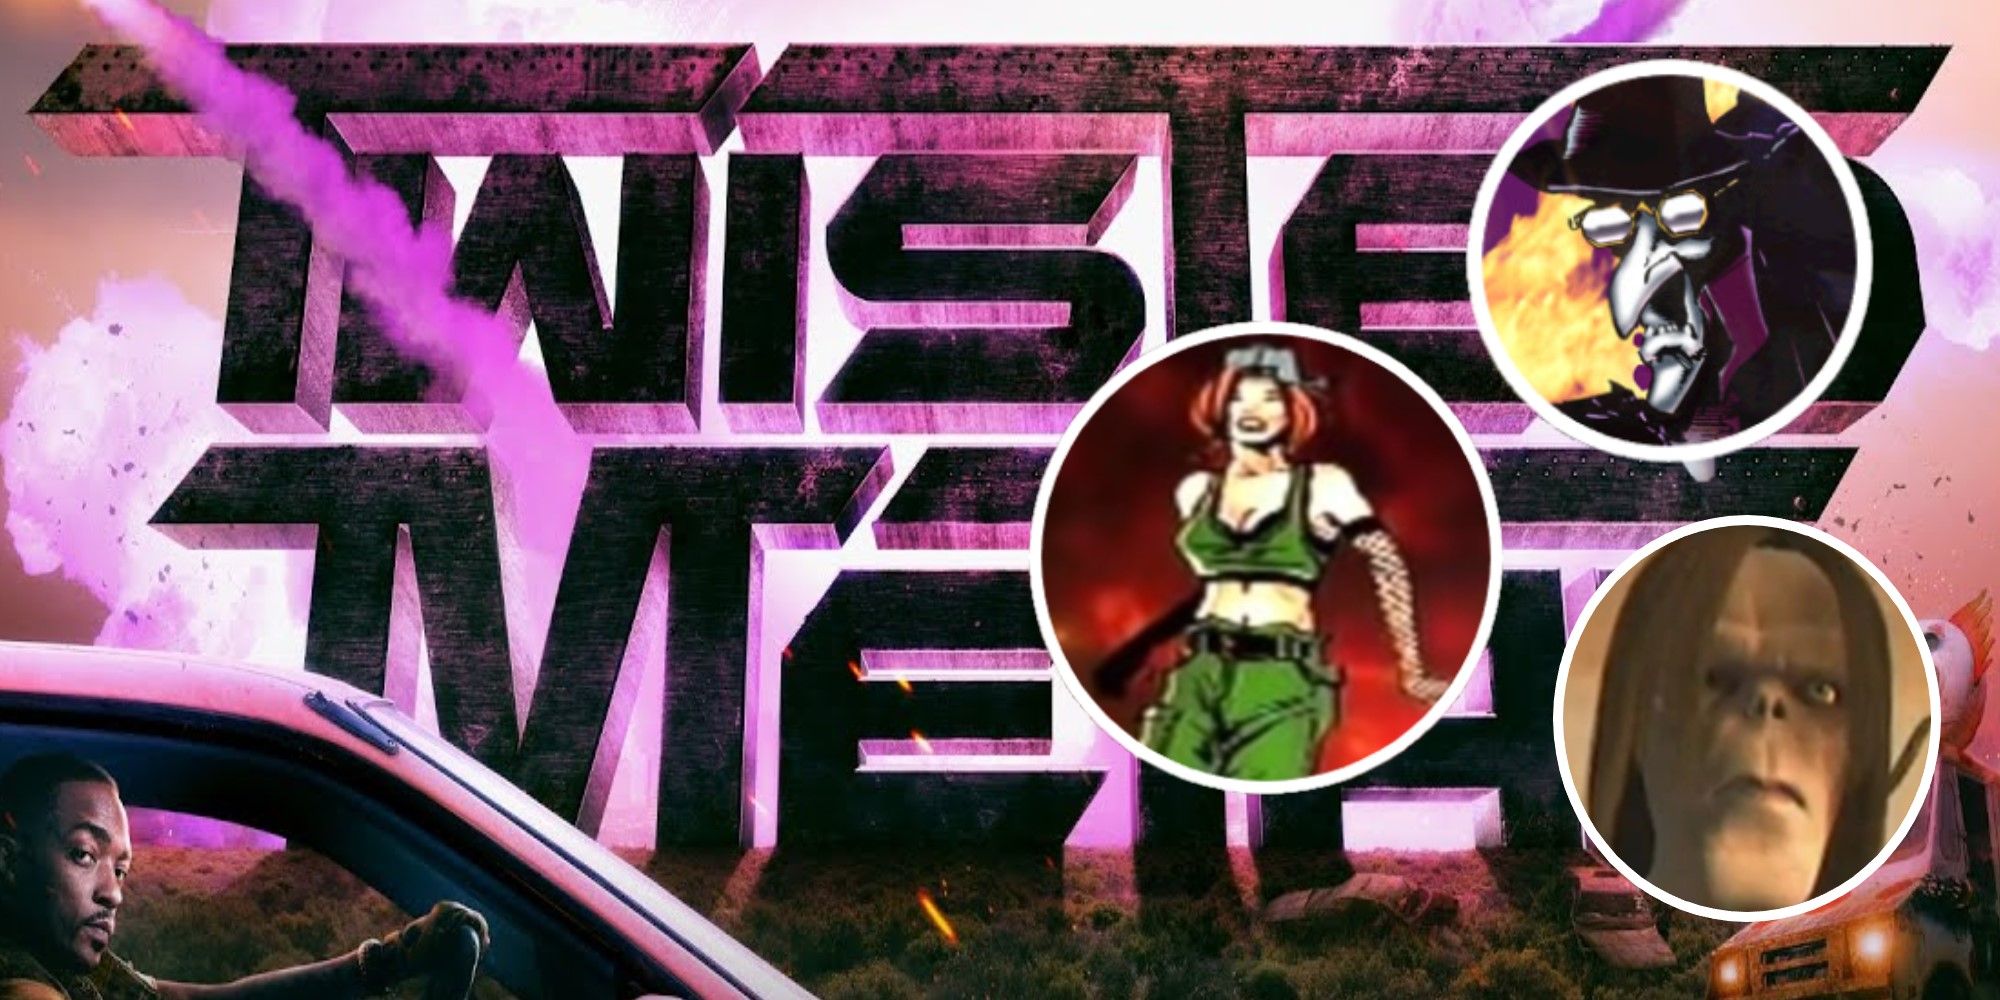 Twisted Metal' Season 2 Rumors, News, Updates